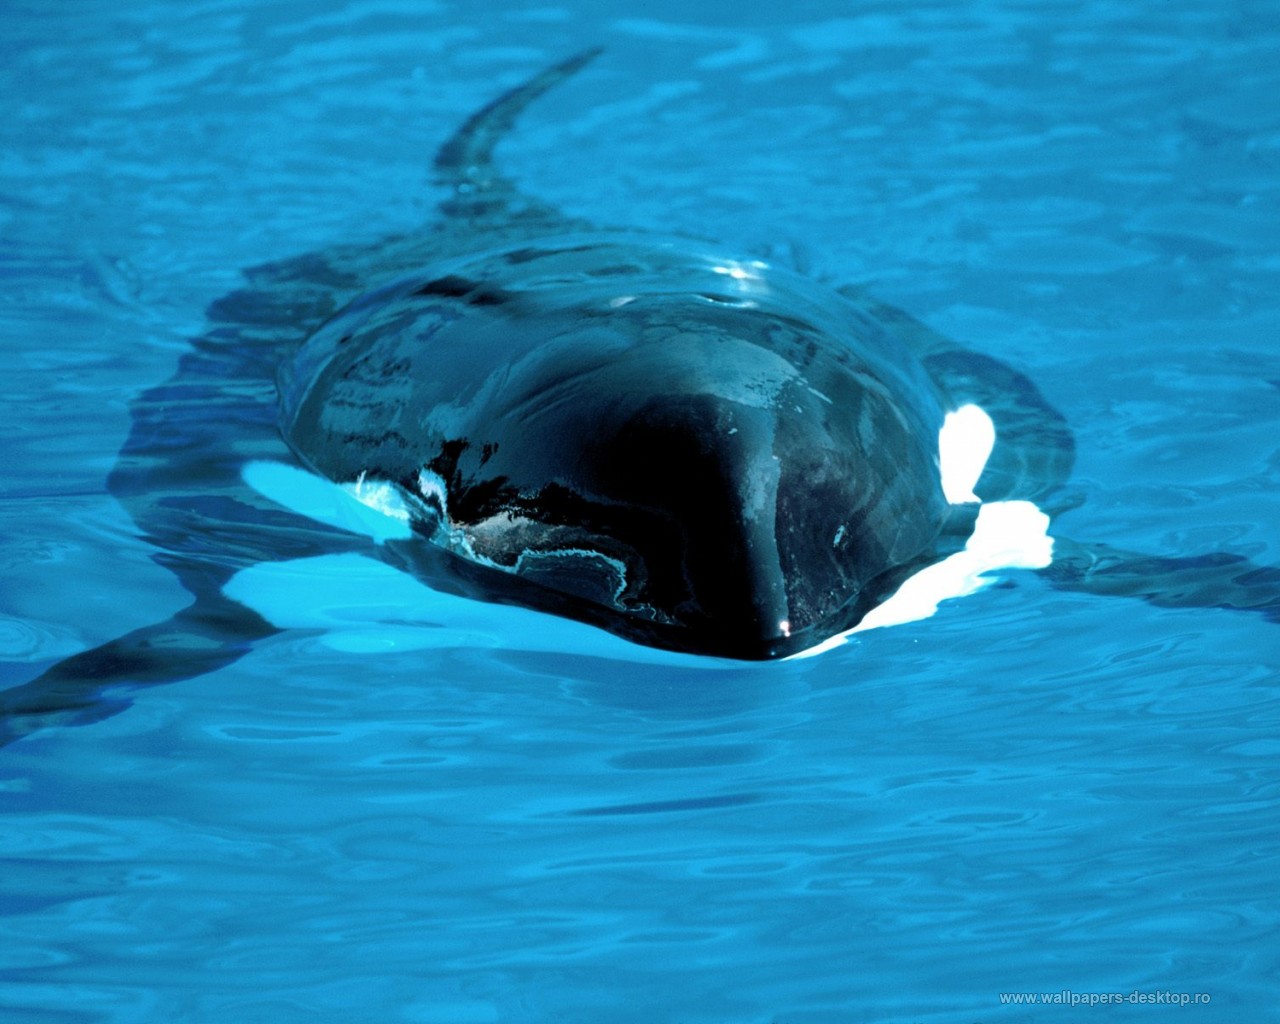 Wallpaper Desktop Ro Acvatice Ocean Silent And Deadly Killer Whale